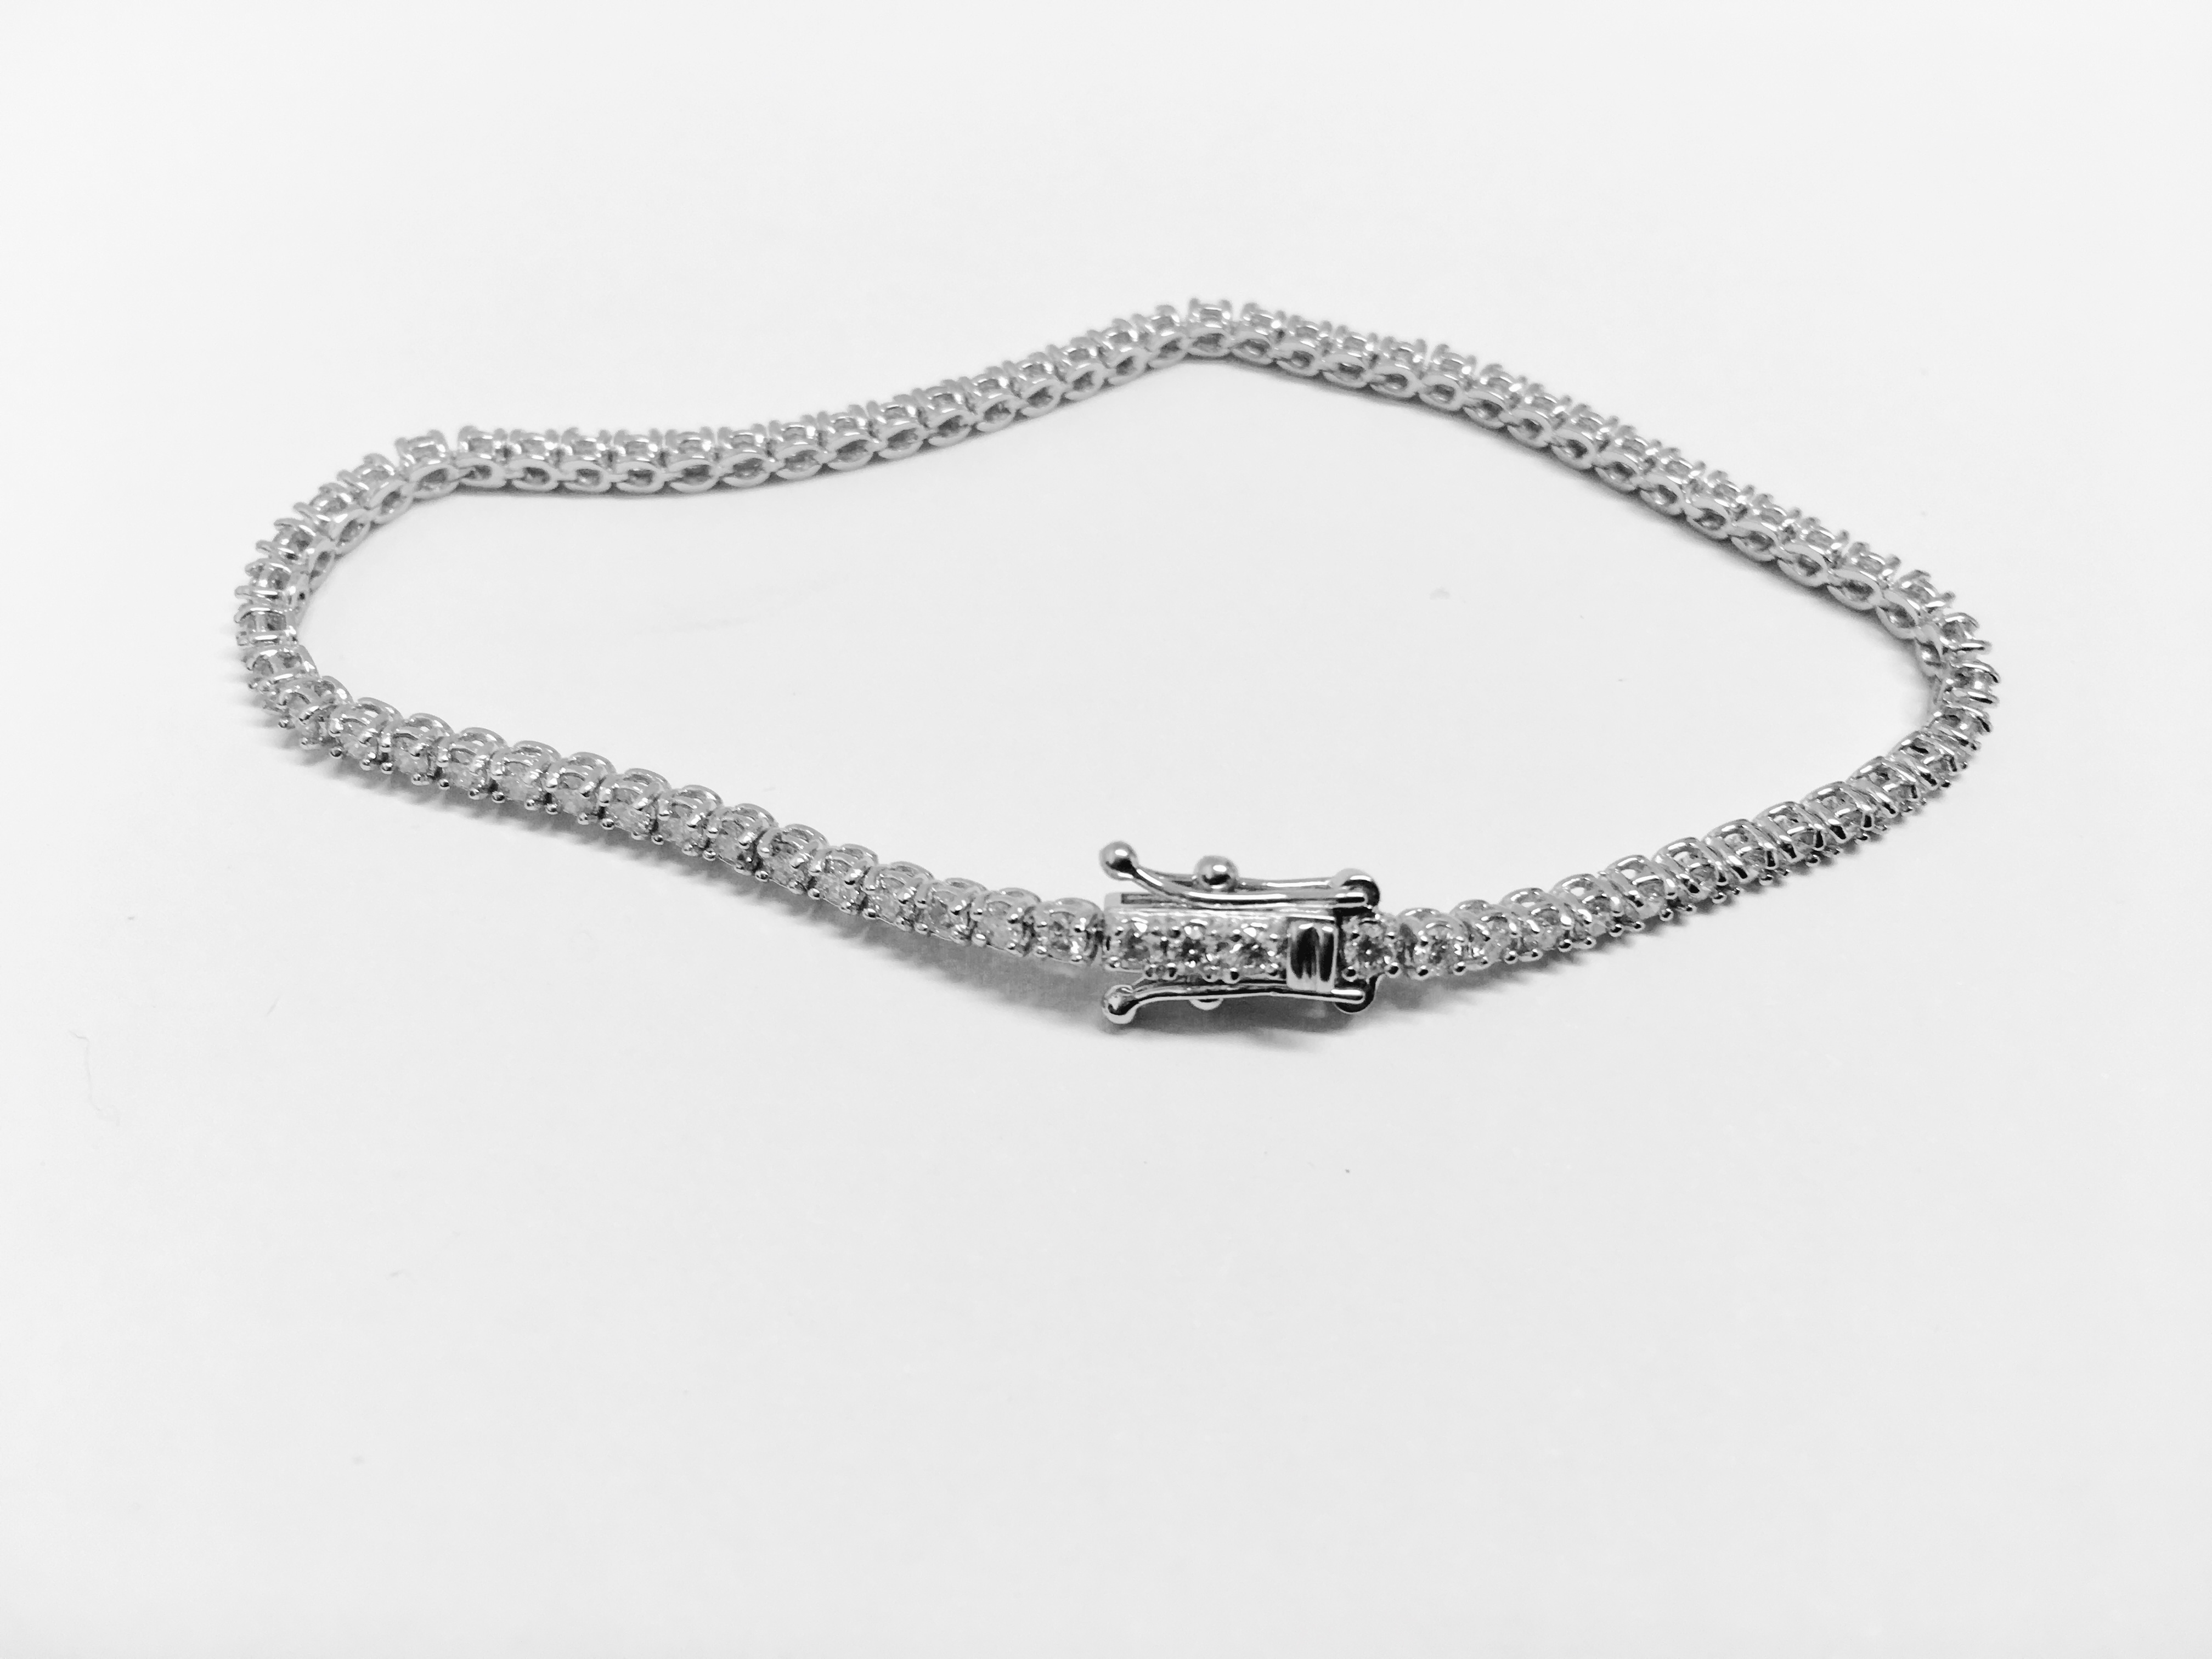 2.10ct diamond tennis bracelet with 70 brilliant cut diamonds - Image 6 of 28